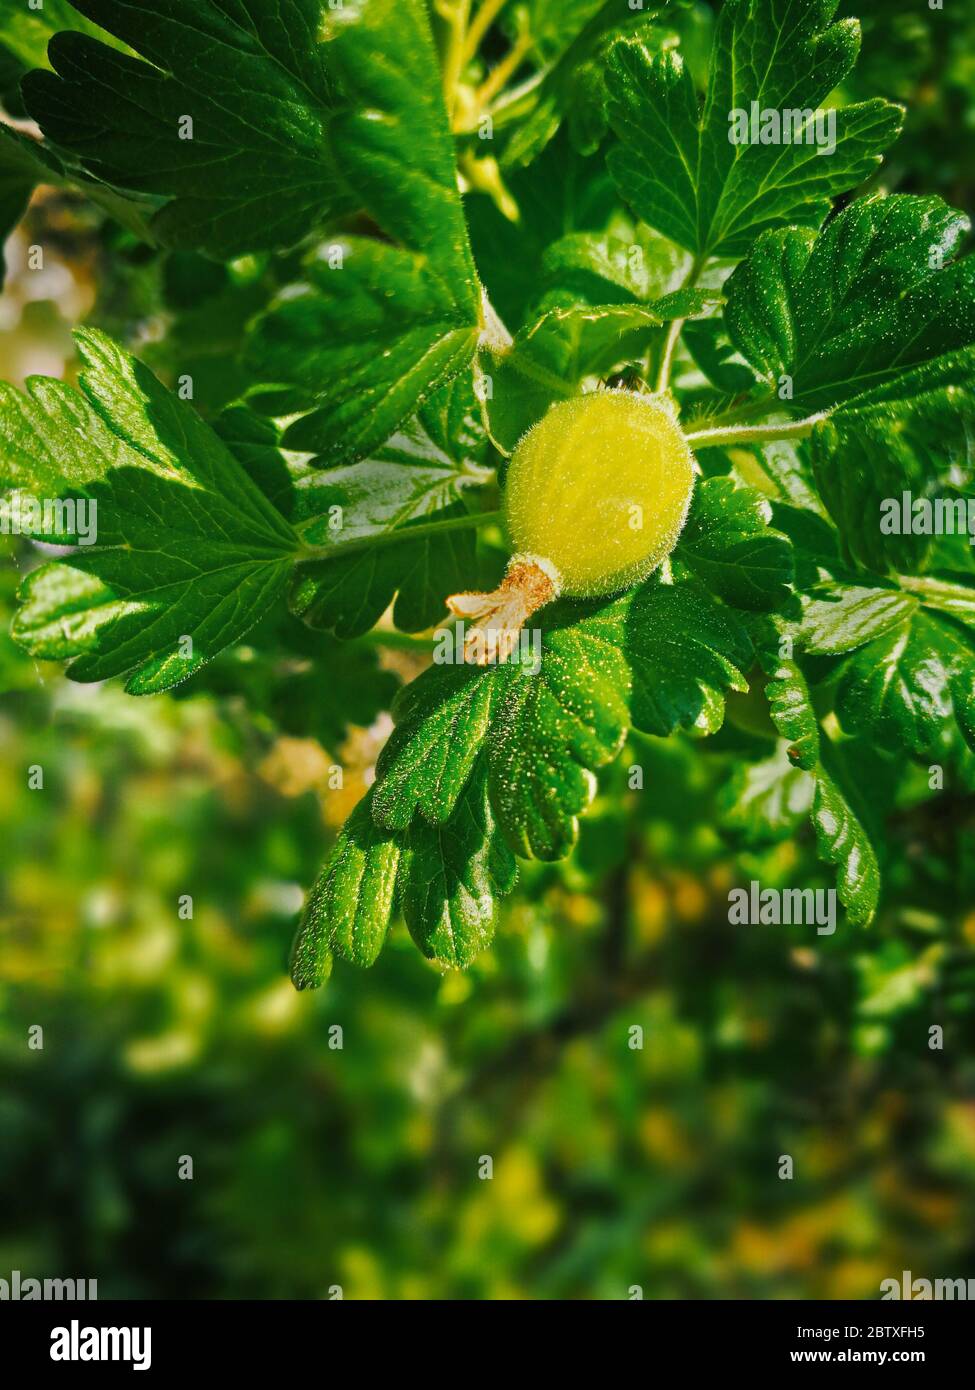 Branch with an immature, green gooseberry (Ribes uva-crispa) Stock Photo